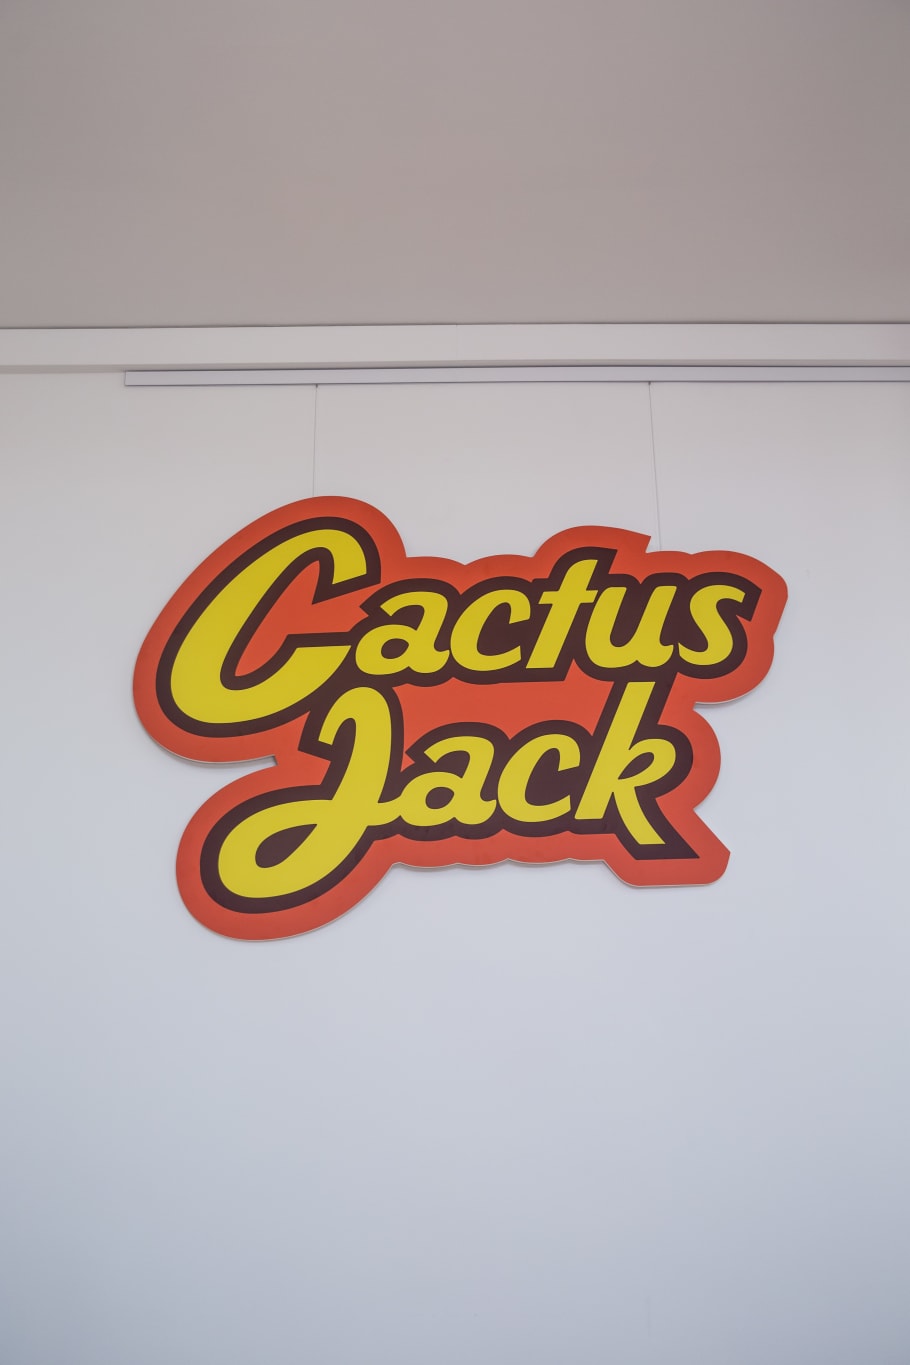 reese's cactus jack